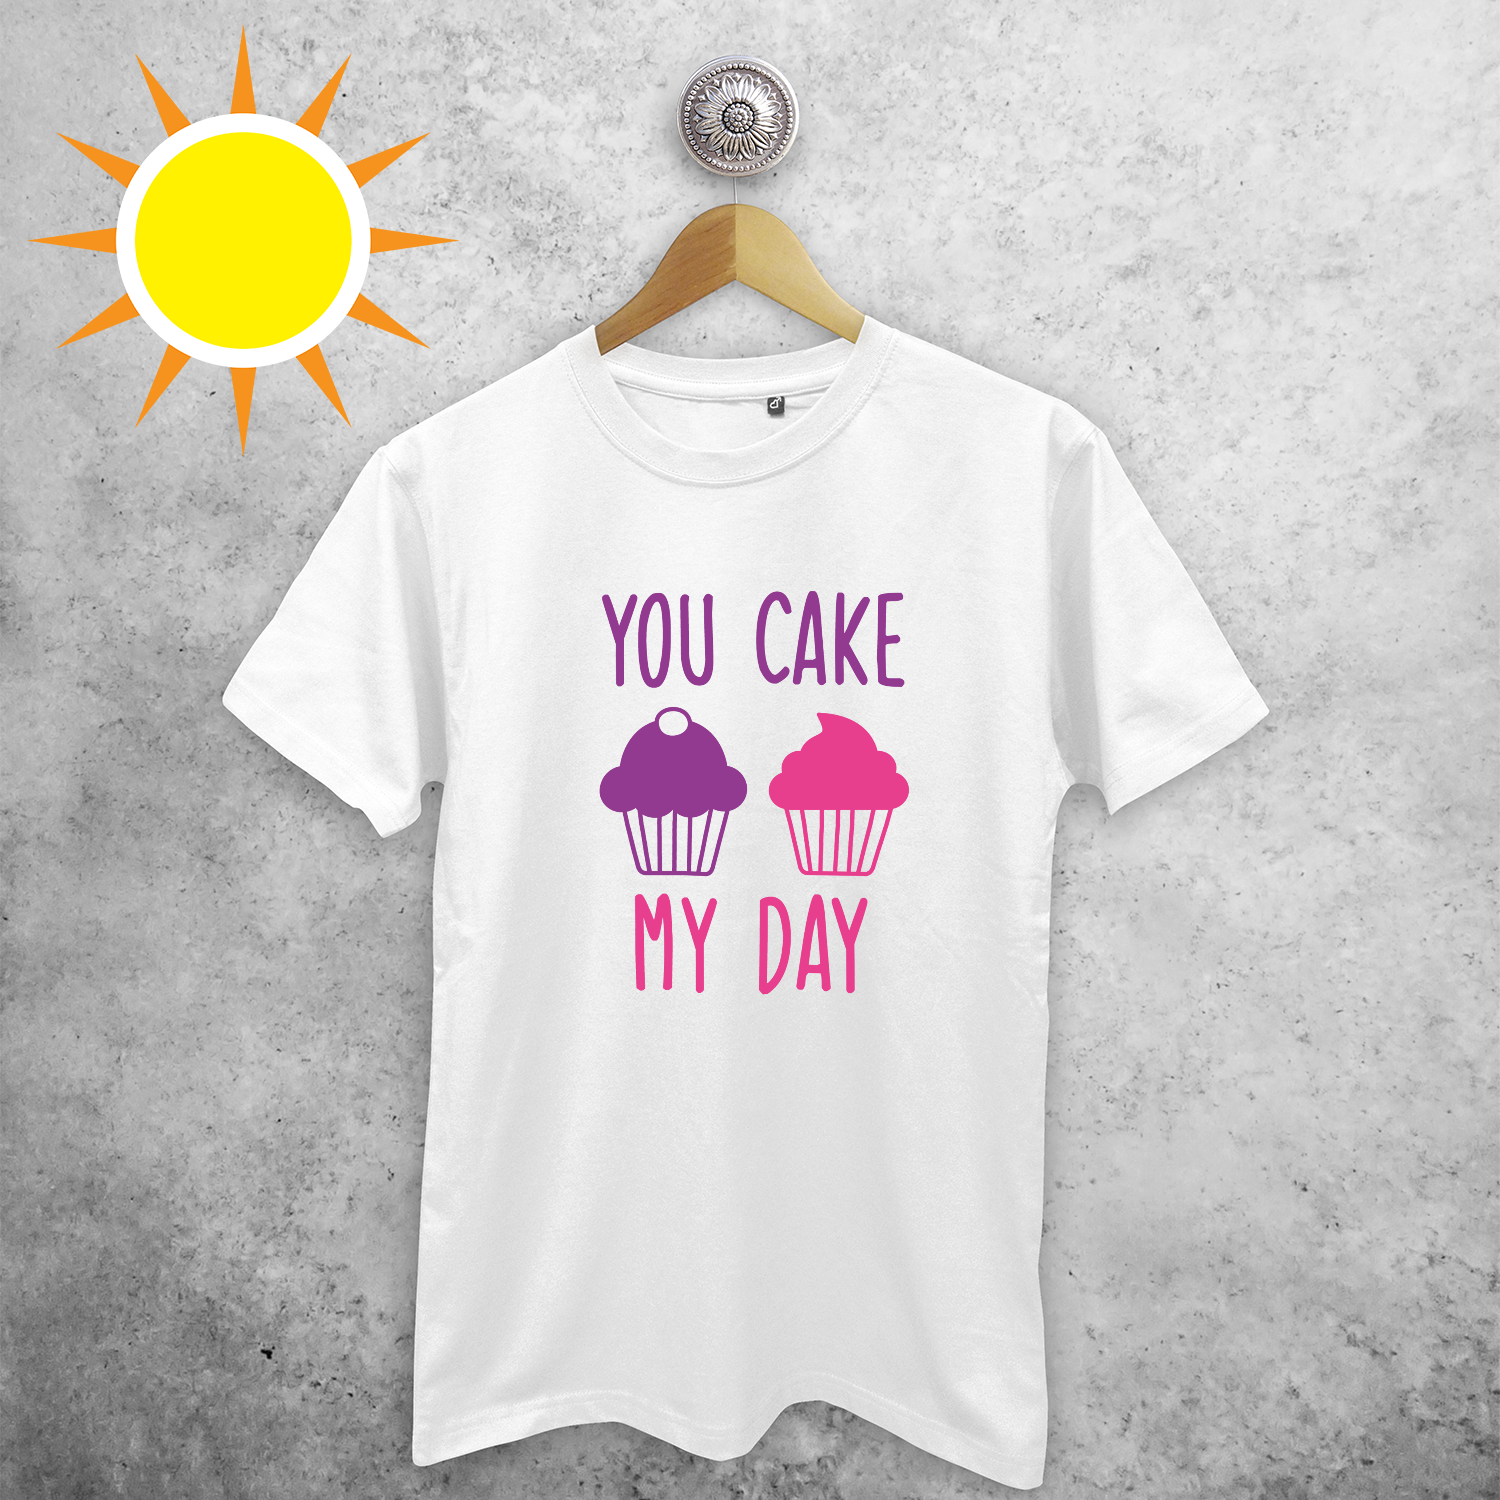 'You cake my day' magic adult shirt